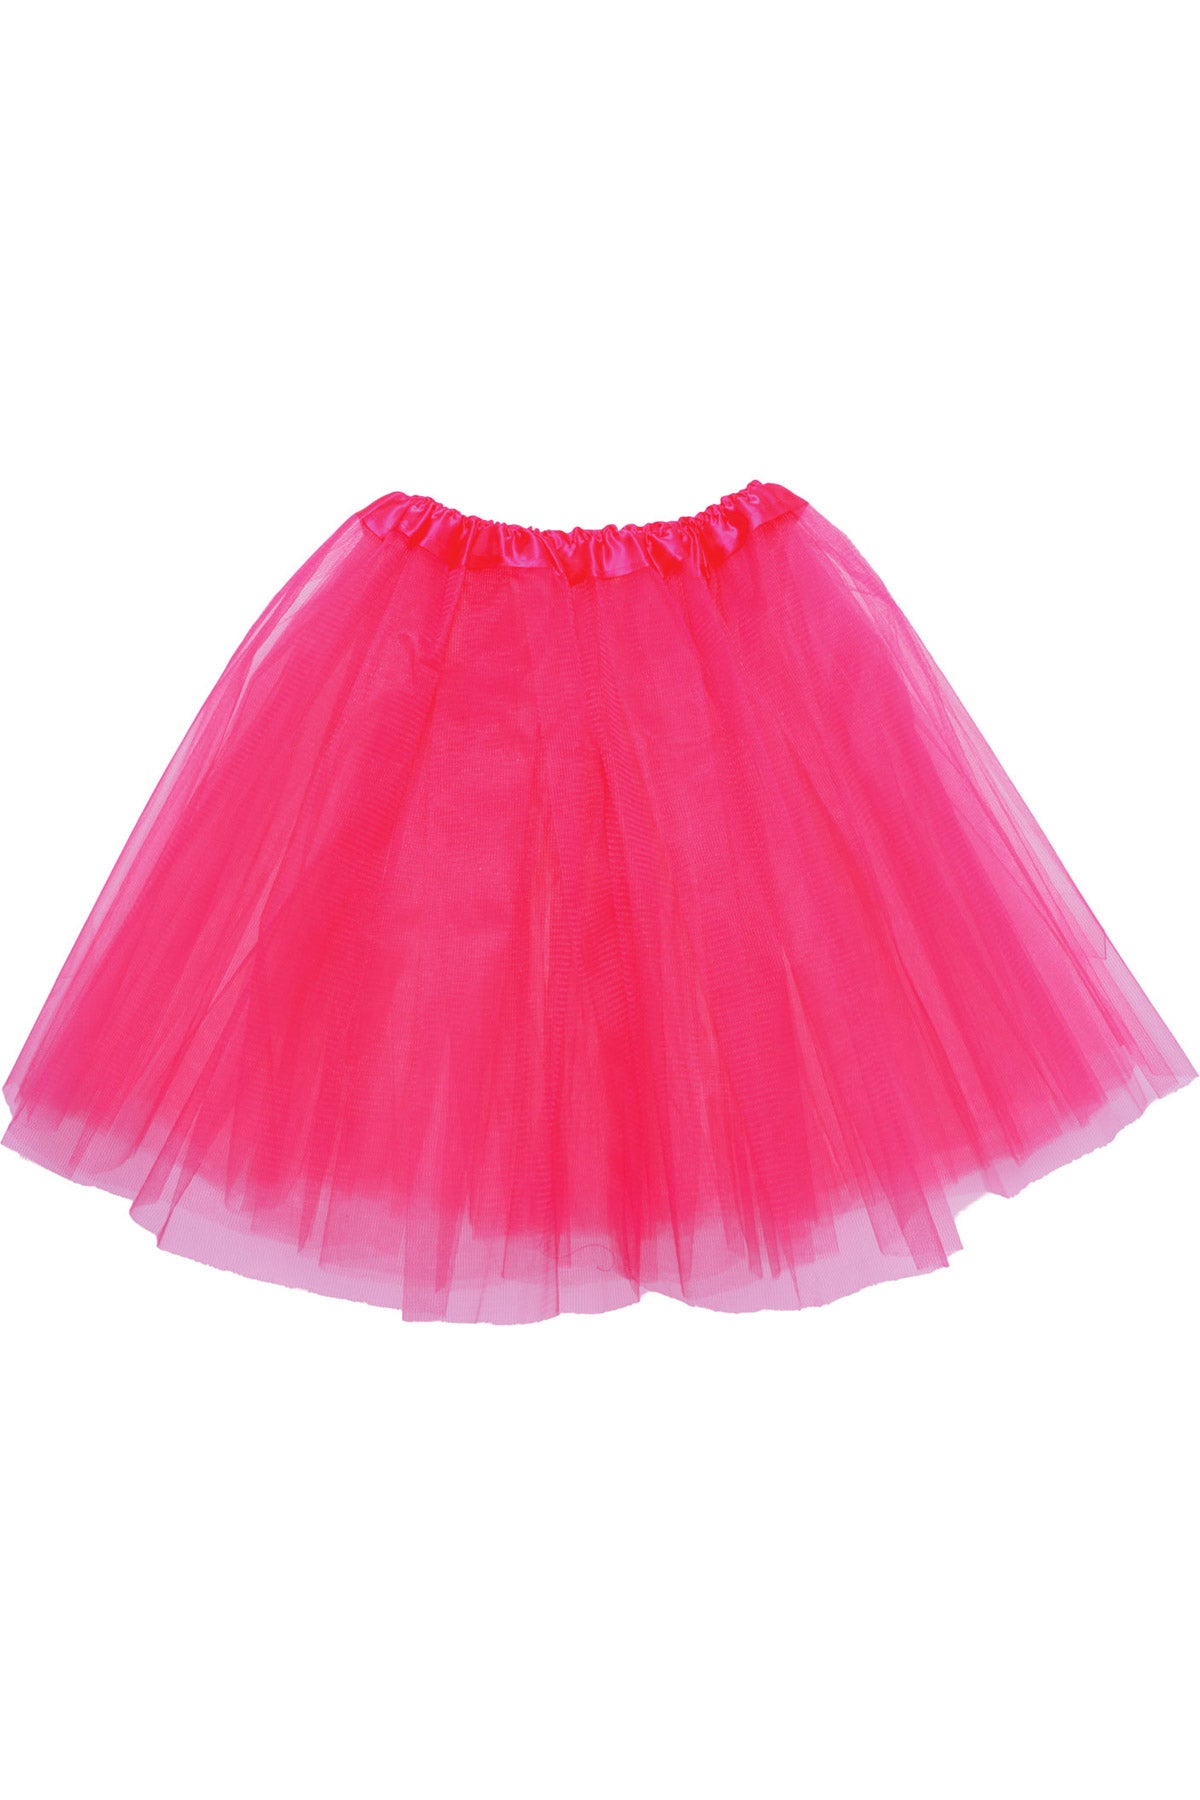 Promo Tutu - Neon Pink Underwraps  29888